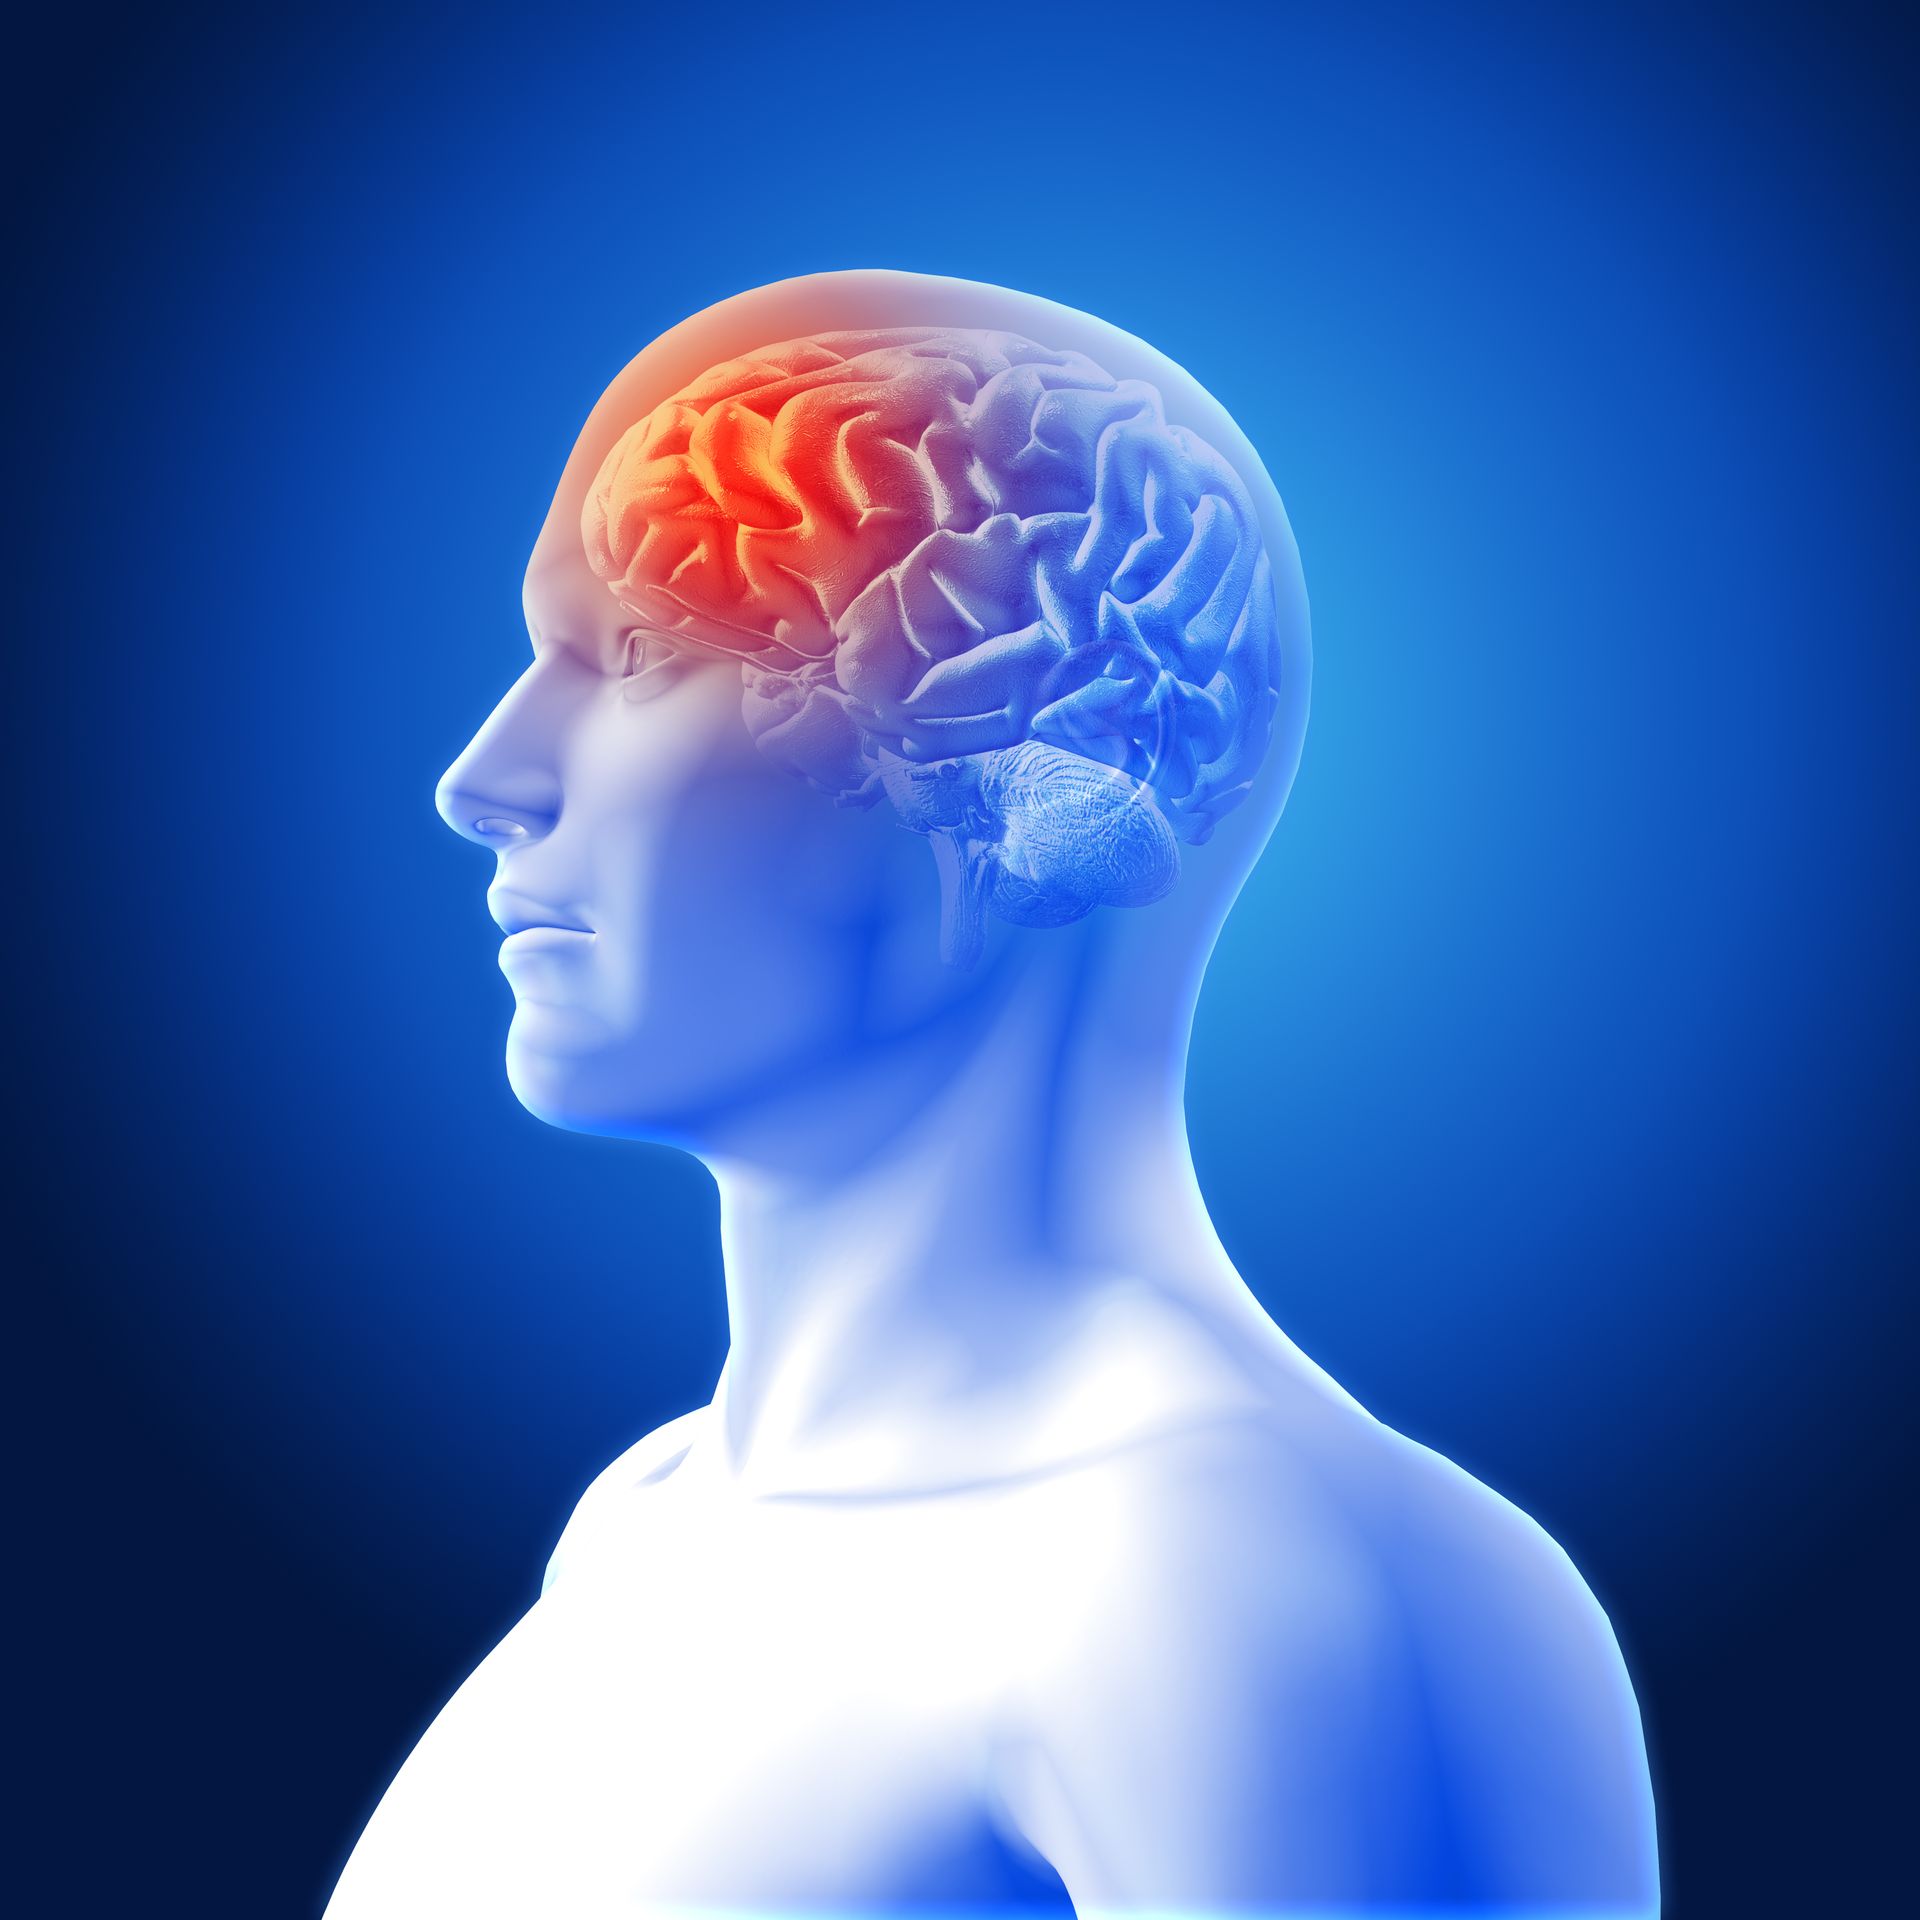 O que um tumor no cérebro pode causar?